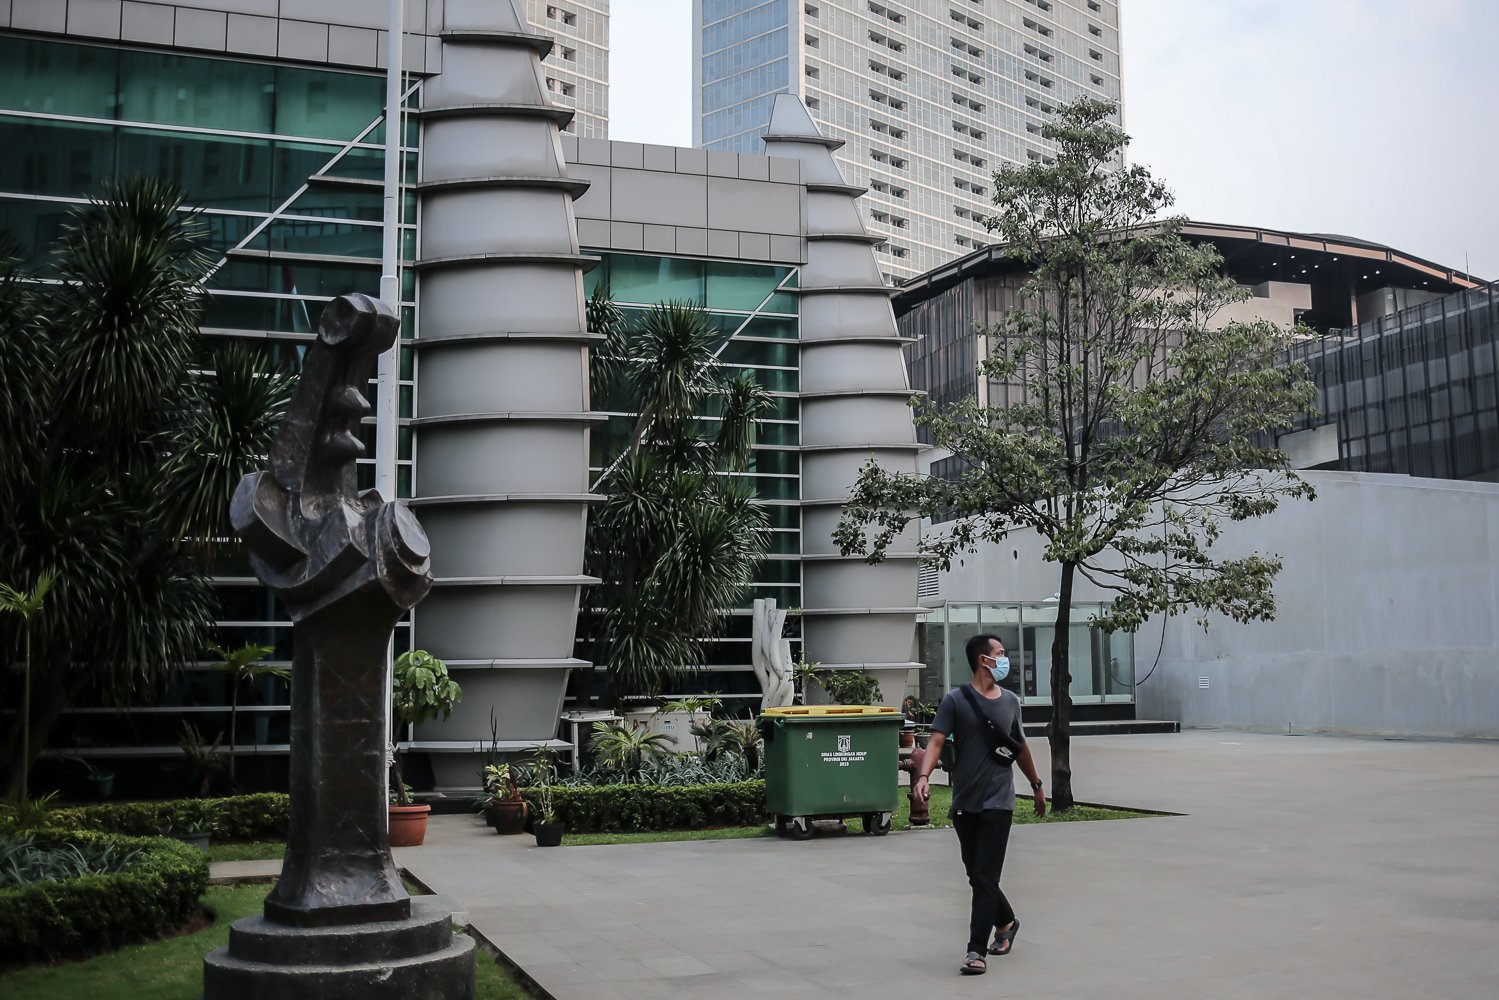 Pengunjung melintas di wilayah Taman Ismail Marzuki, Cikini, Jakarta, Kamis (30/6). TIM kini hadir dengan wajah baru dan telah dibuka untuk publik secara bertahap mulai tanggal 3 Juni 2022 serta direcanakan pada awal bulan Juli 2022 Pusat Kesenian Jakarta ini akan diresmikan.